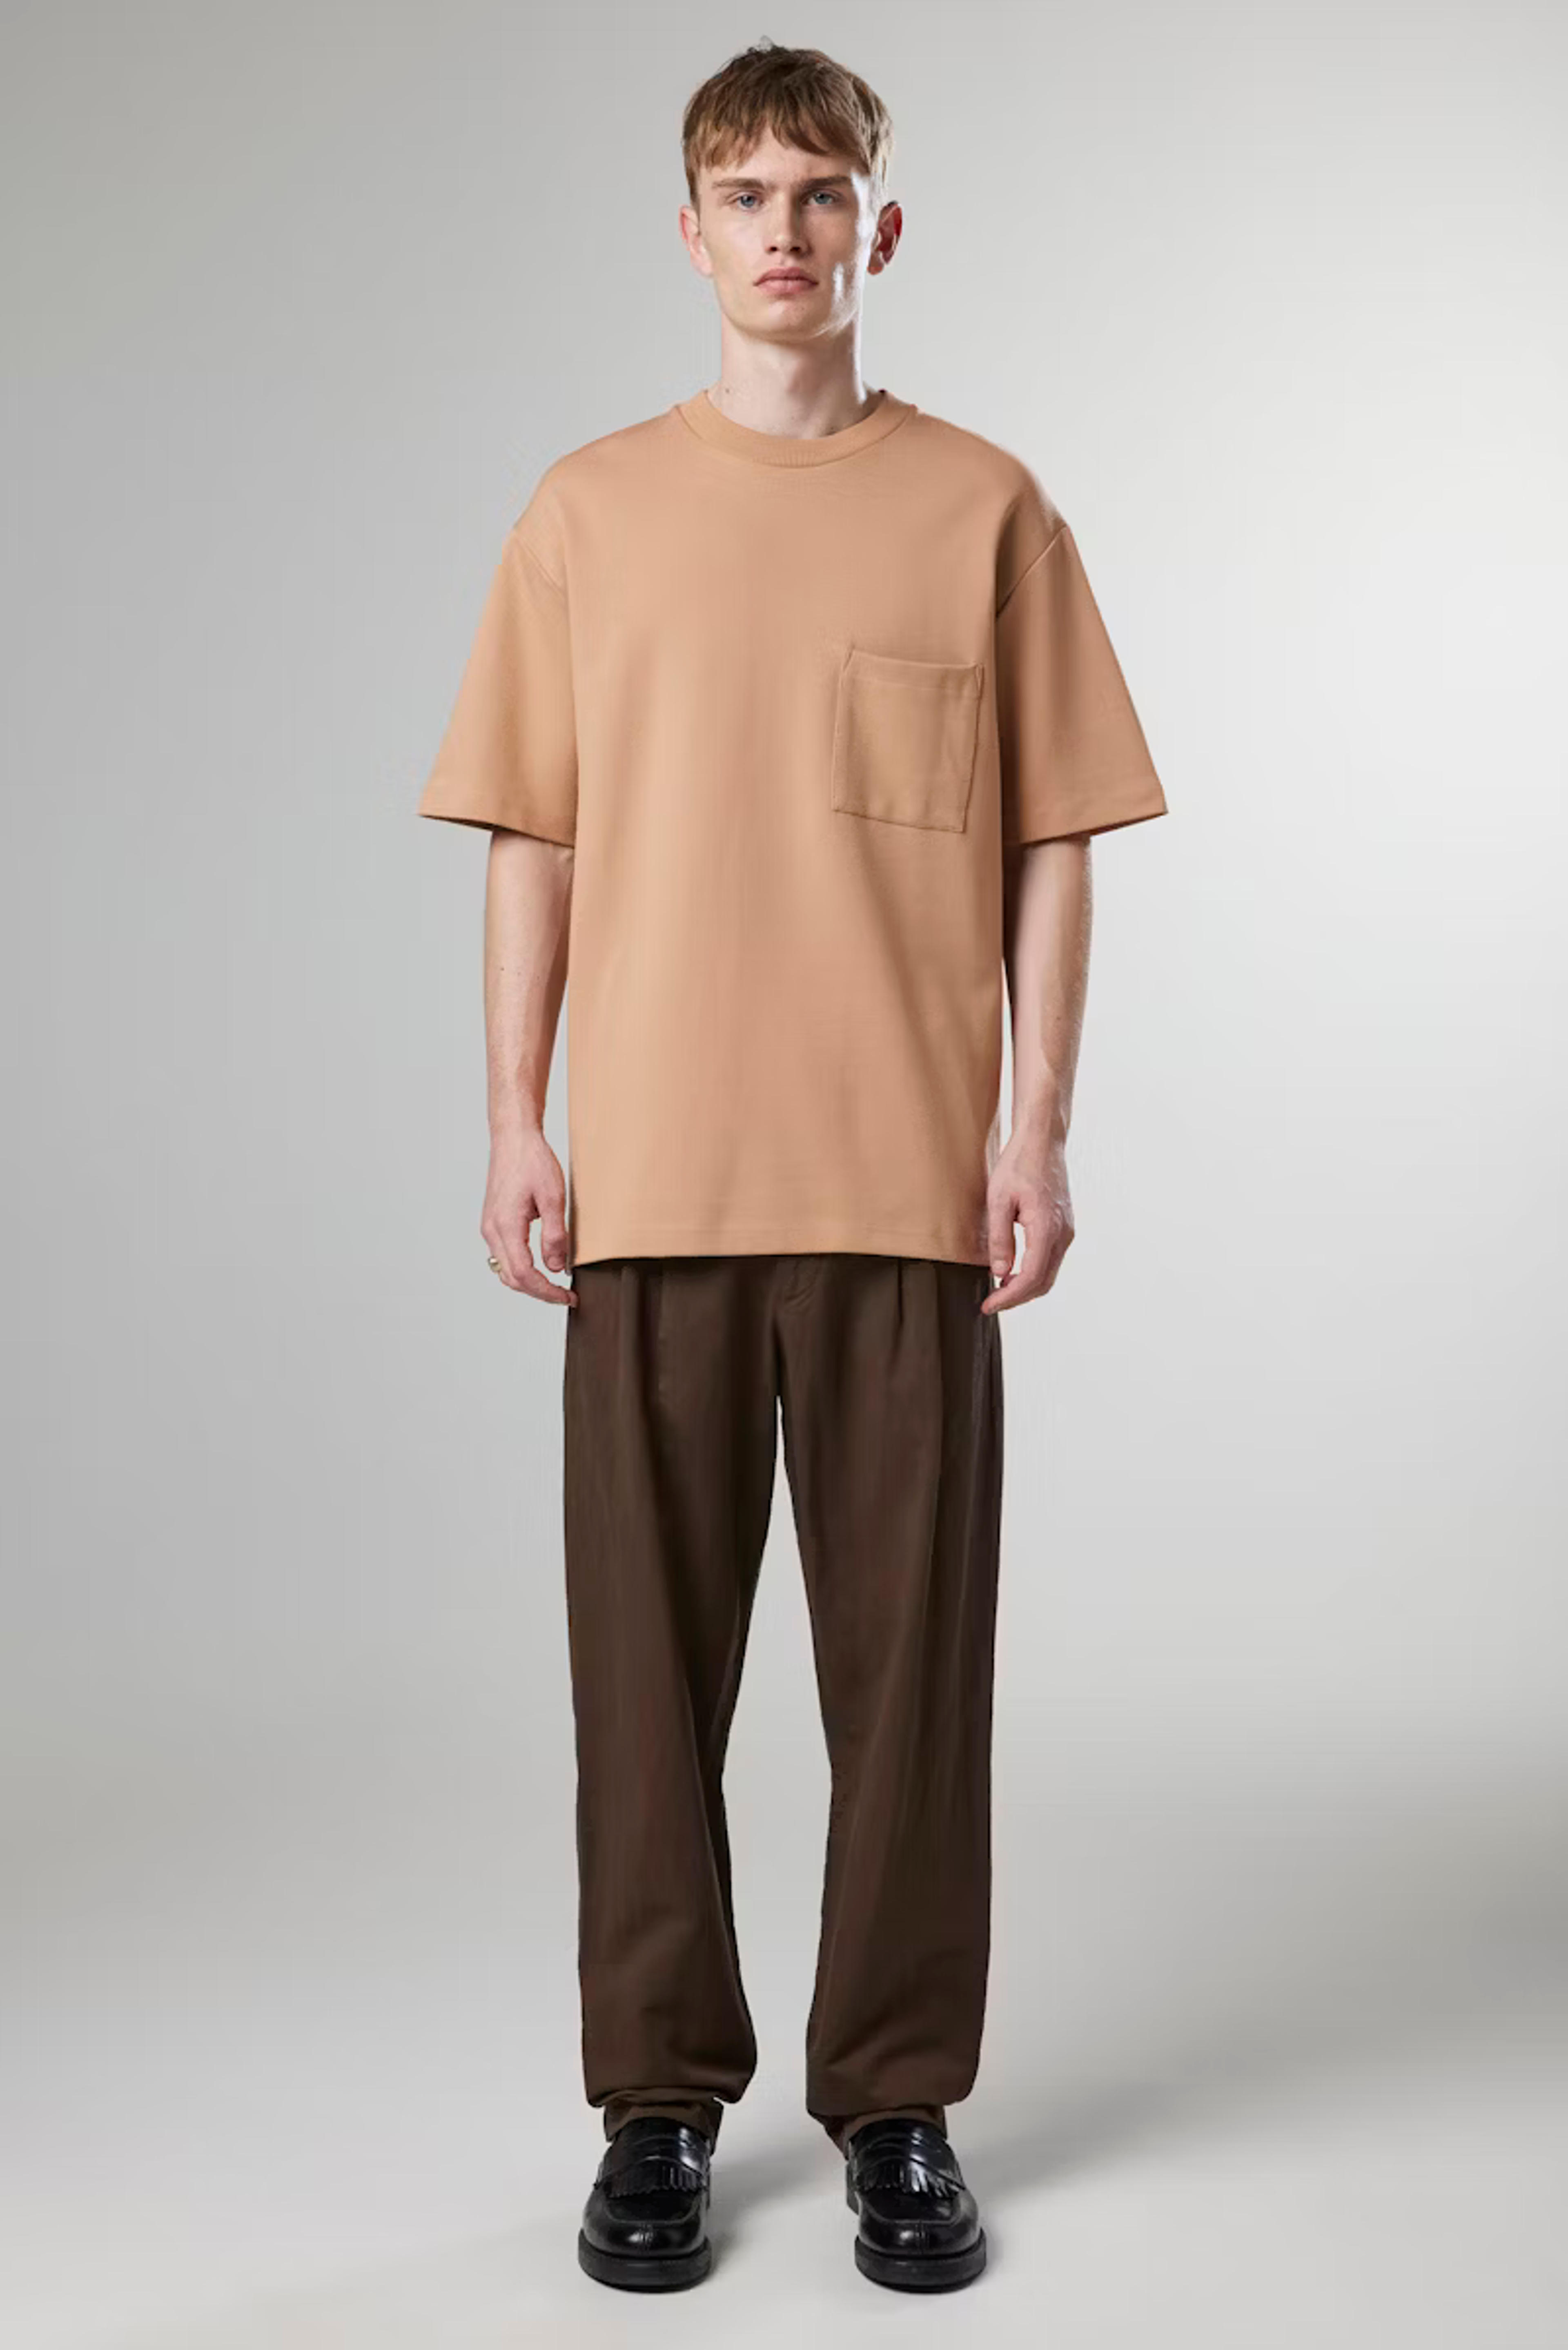 Nat 3457 men's t-shirt - Brown - Buy online at NN07®